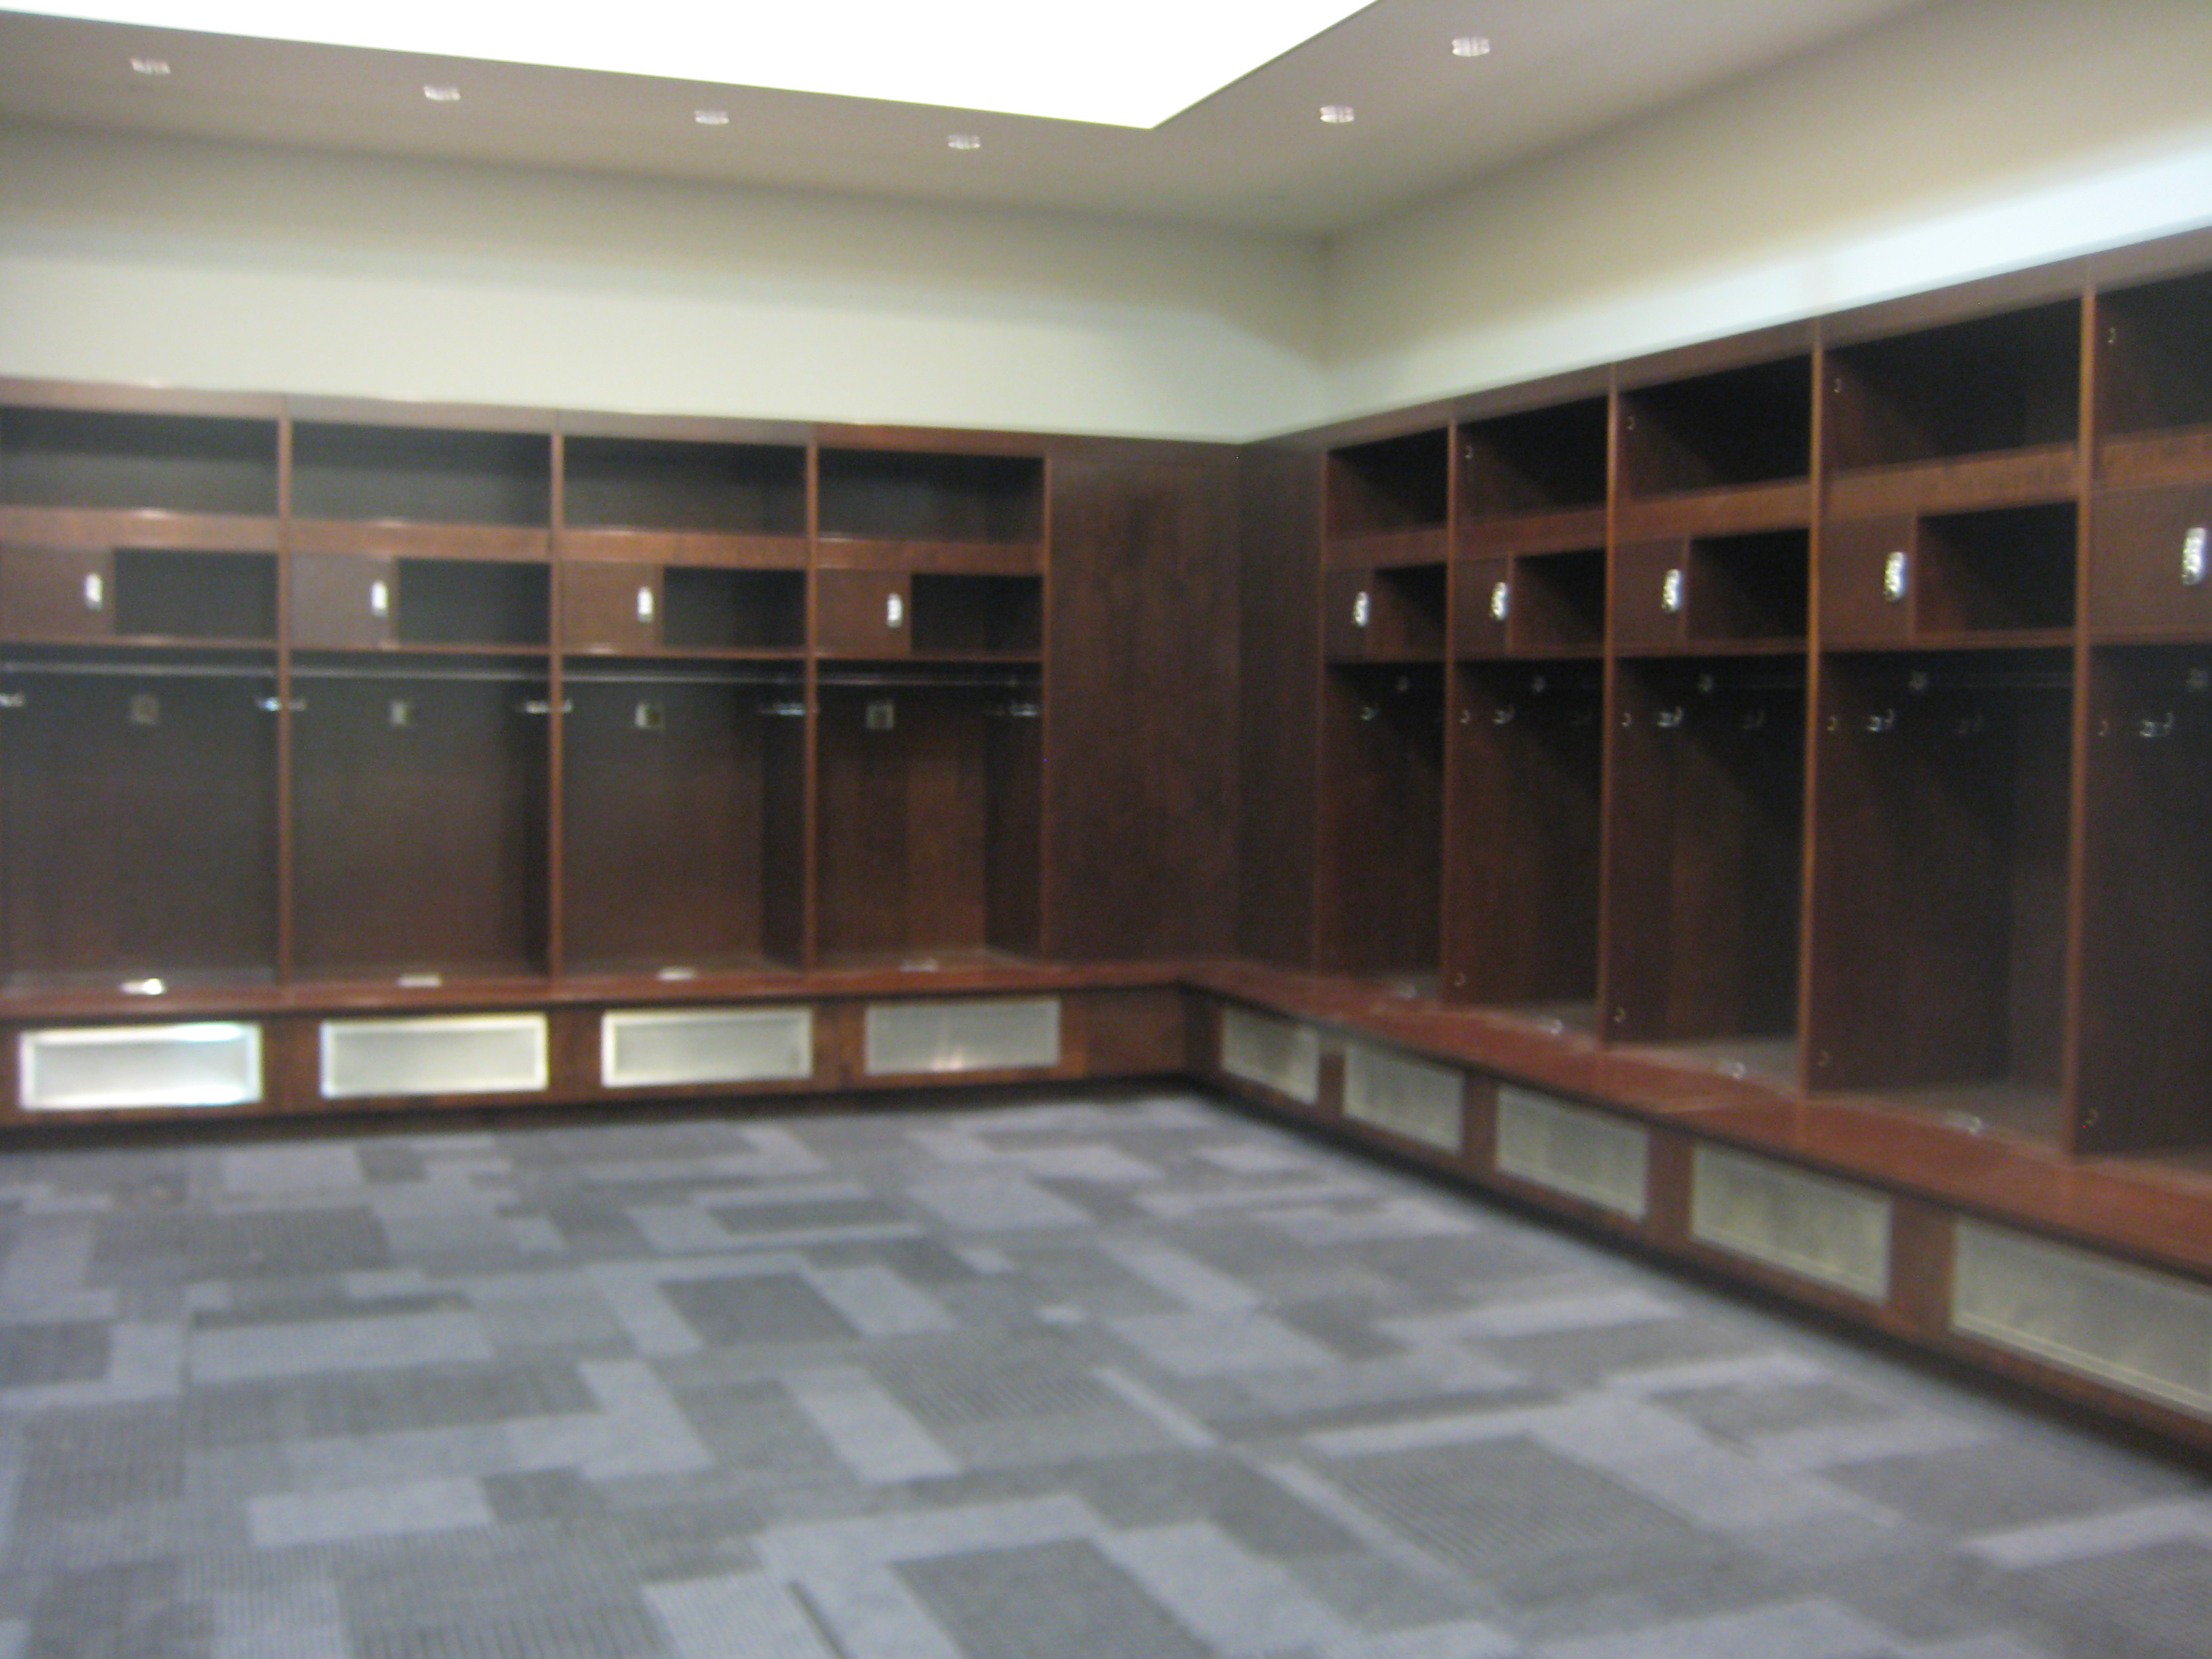 Dallas Cowboys - Rookies locker room tonight #DALvsLA